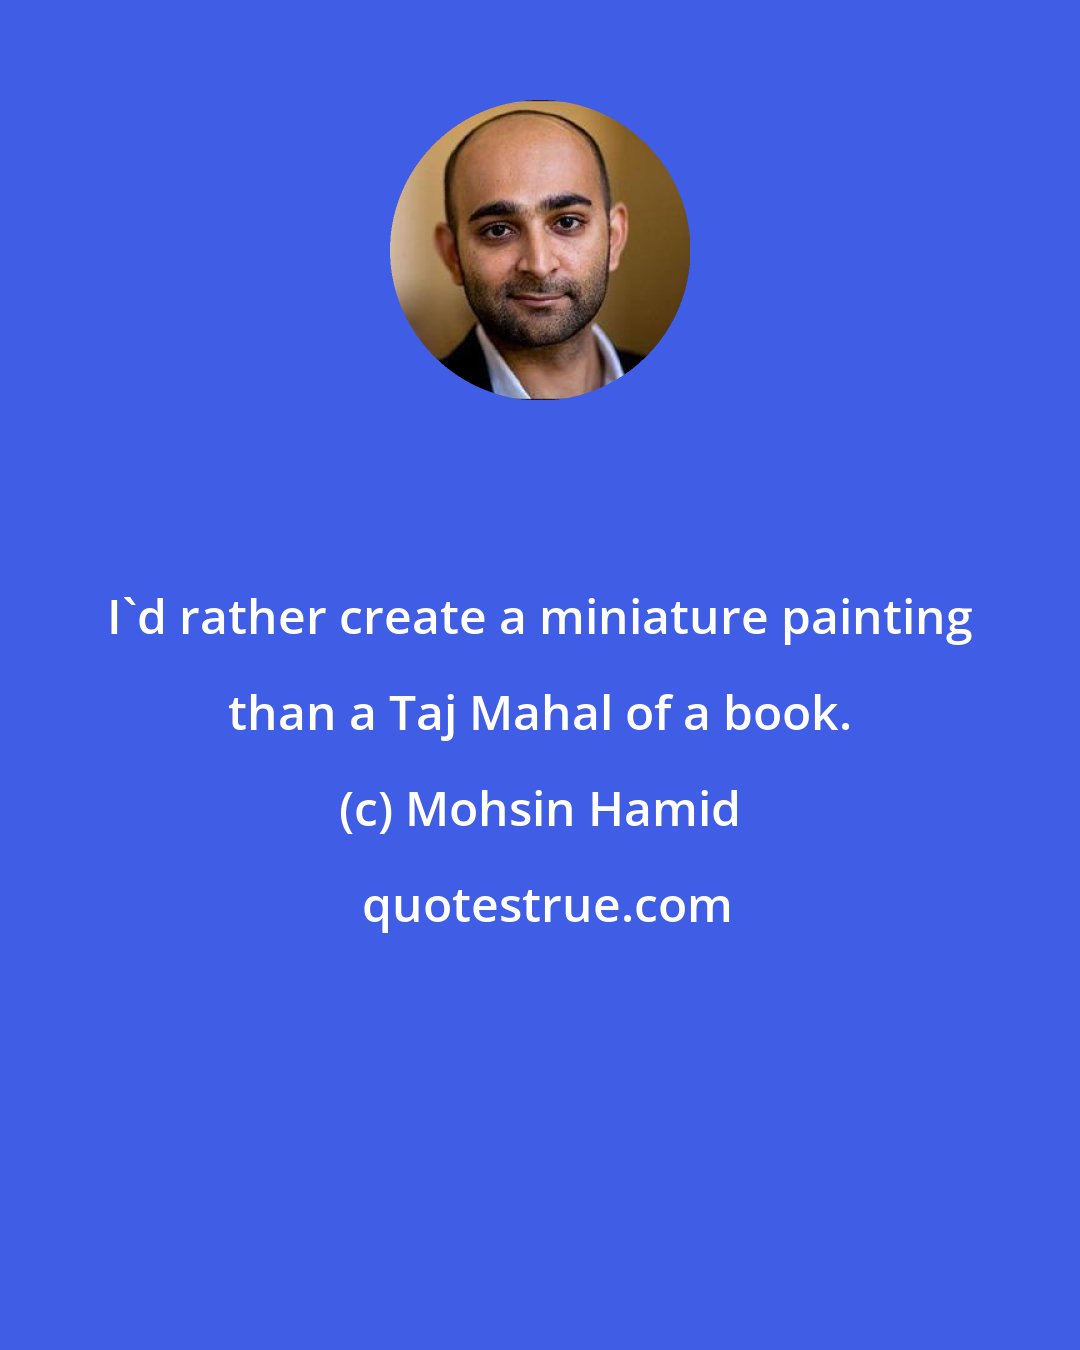 Mohsin Hamid: I'd rather create a miniature painting than a Taj Mahal of a book.